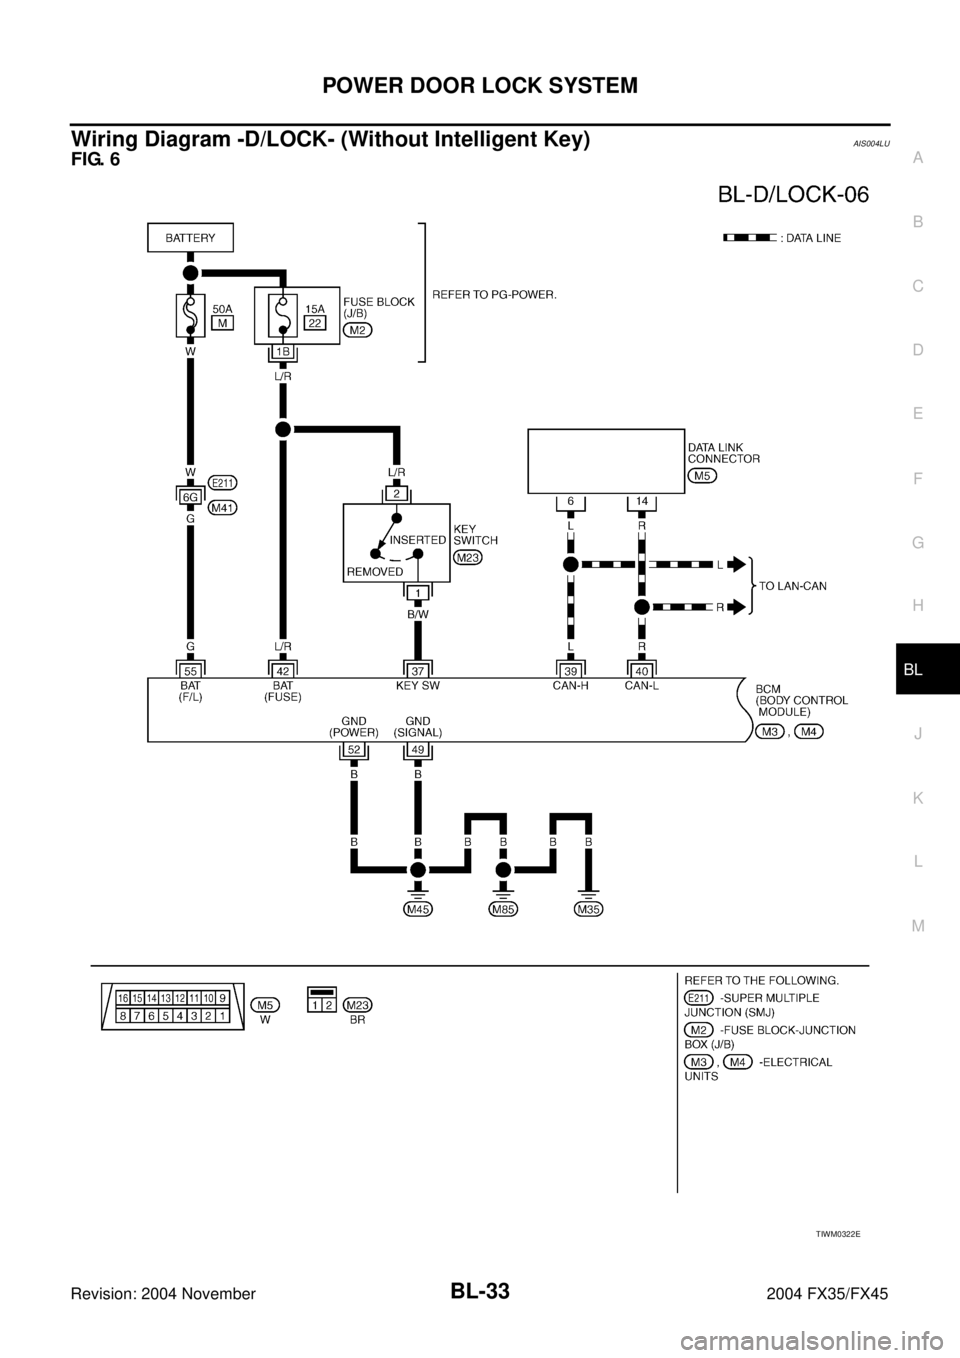 INFINITI FX35 2004  Service Manual POWER DOOR LOCK SYSTEM
BL-33
C
D
E
F
G
H
J
K
L
MA
B
BL
Revision: 2004 November 2004 FX35/FX45
Wiring Diagram -D/LOCK- (Without Intelligent Key)AIS004LU
FIG. 6
TIWM0322E 